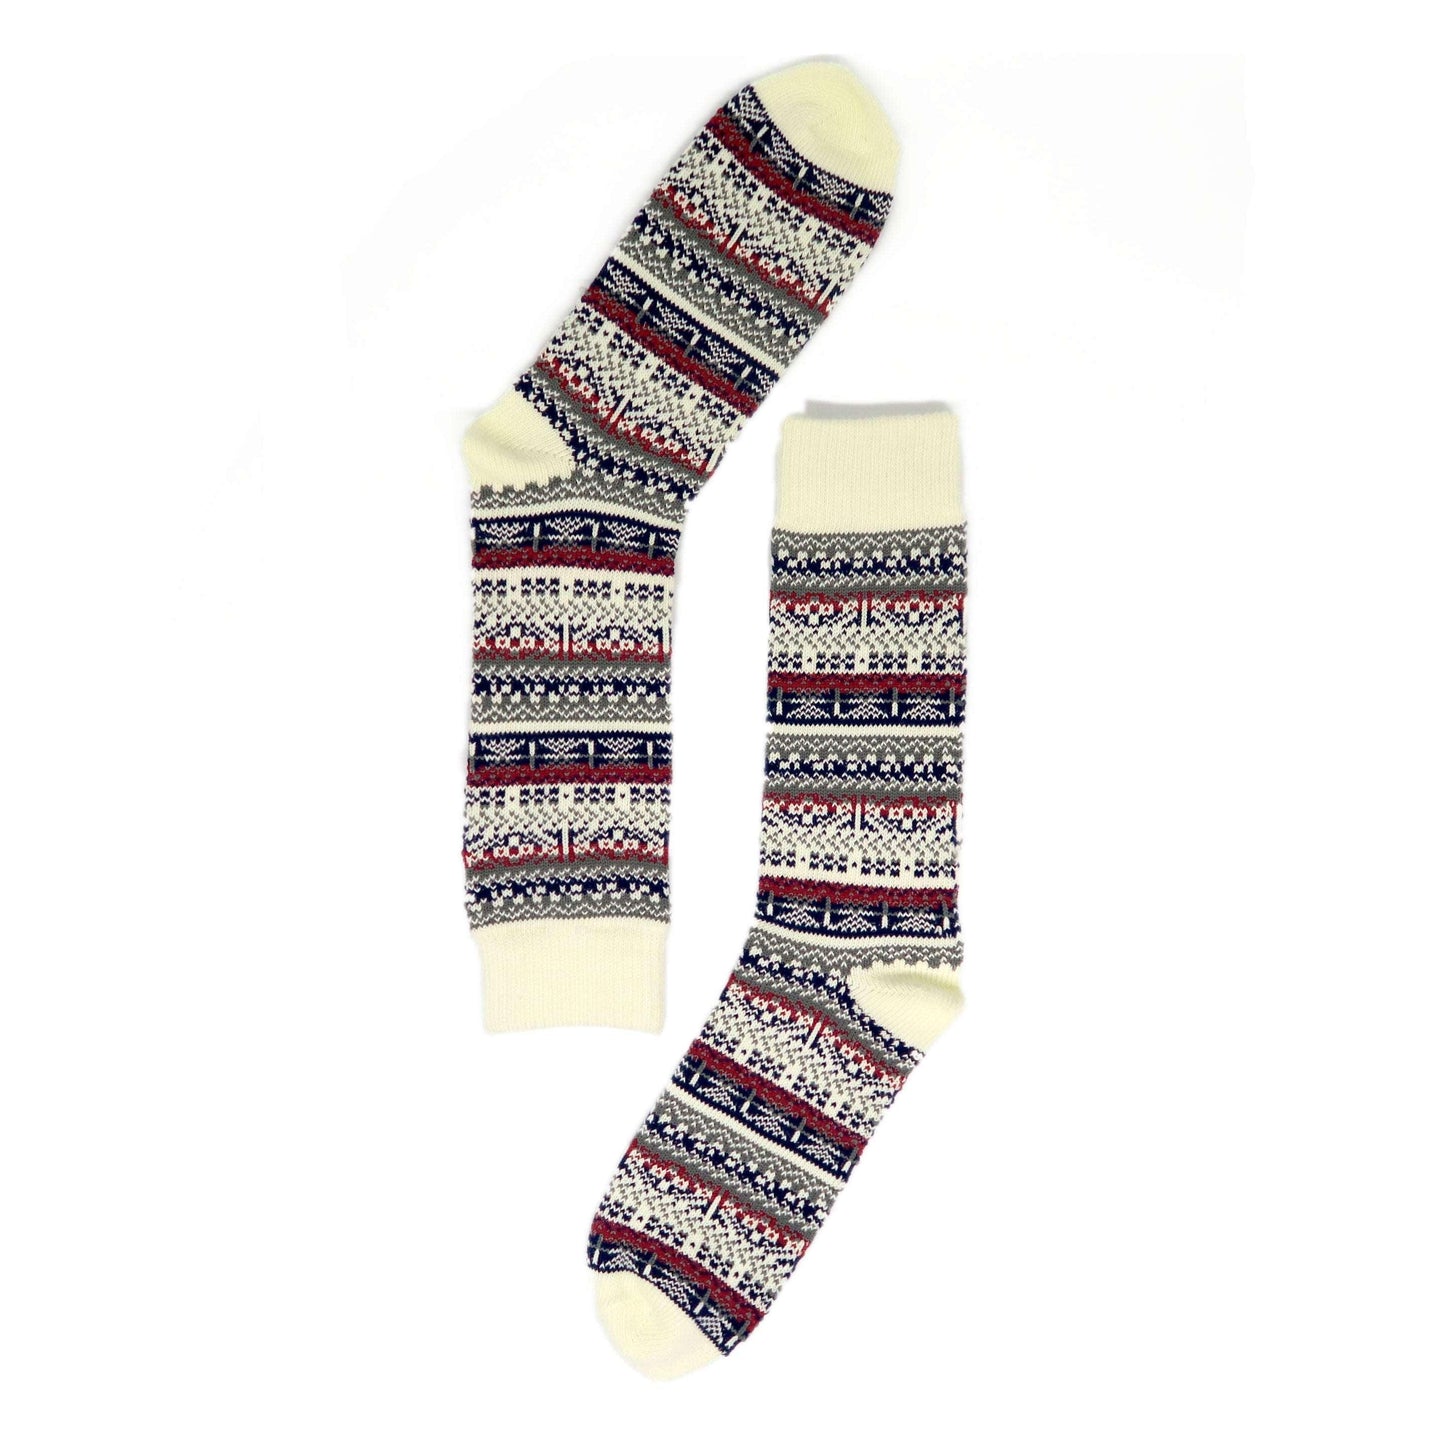 Helsinki sock - white, grey and red trial pattern sock